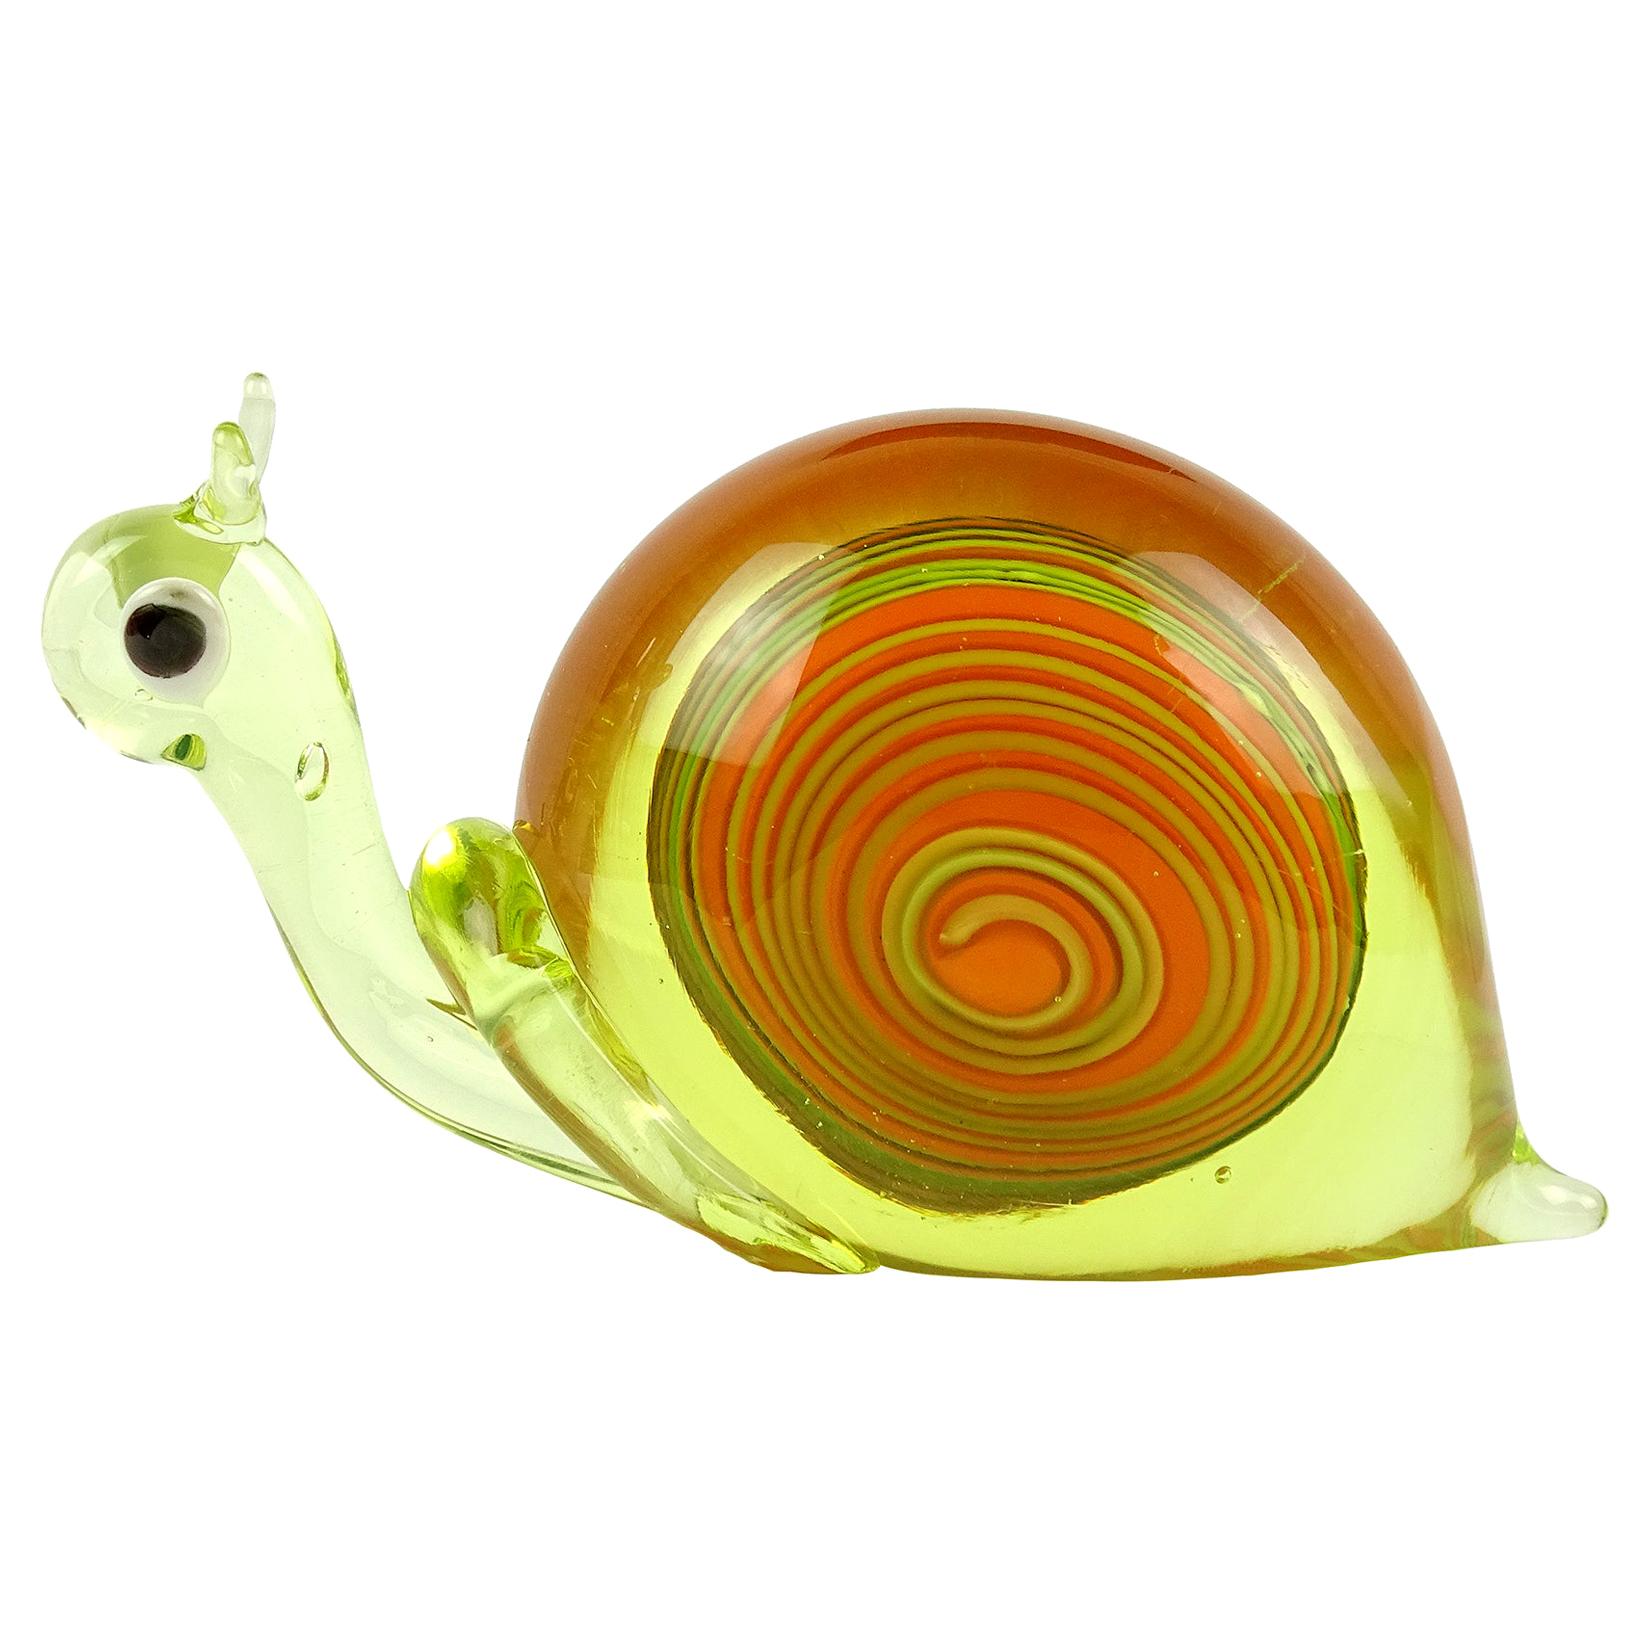 Murano Orange Uranium Green Italian Art Glass Snail Paperweight Sculpture Glows